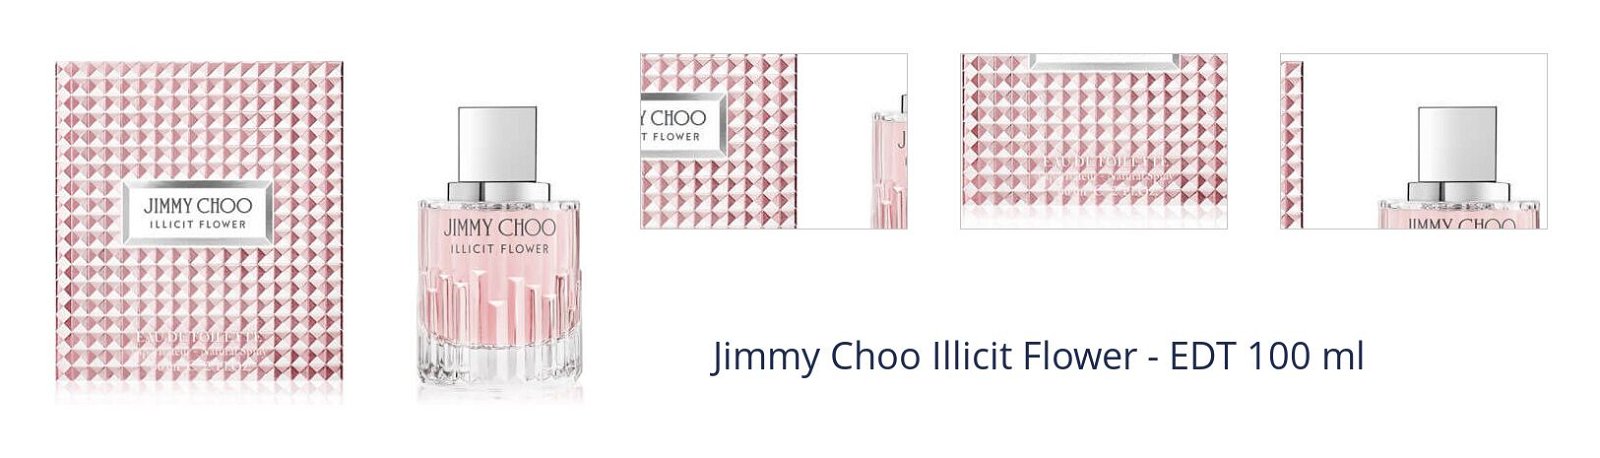 Jimmy Choo Illicit Flower - EDT 100 ml 1